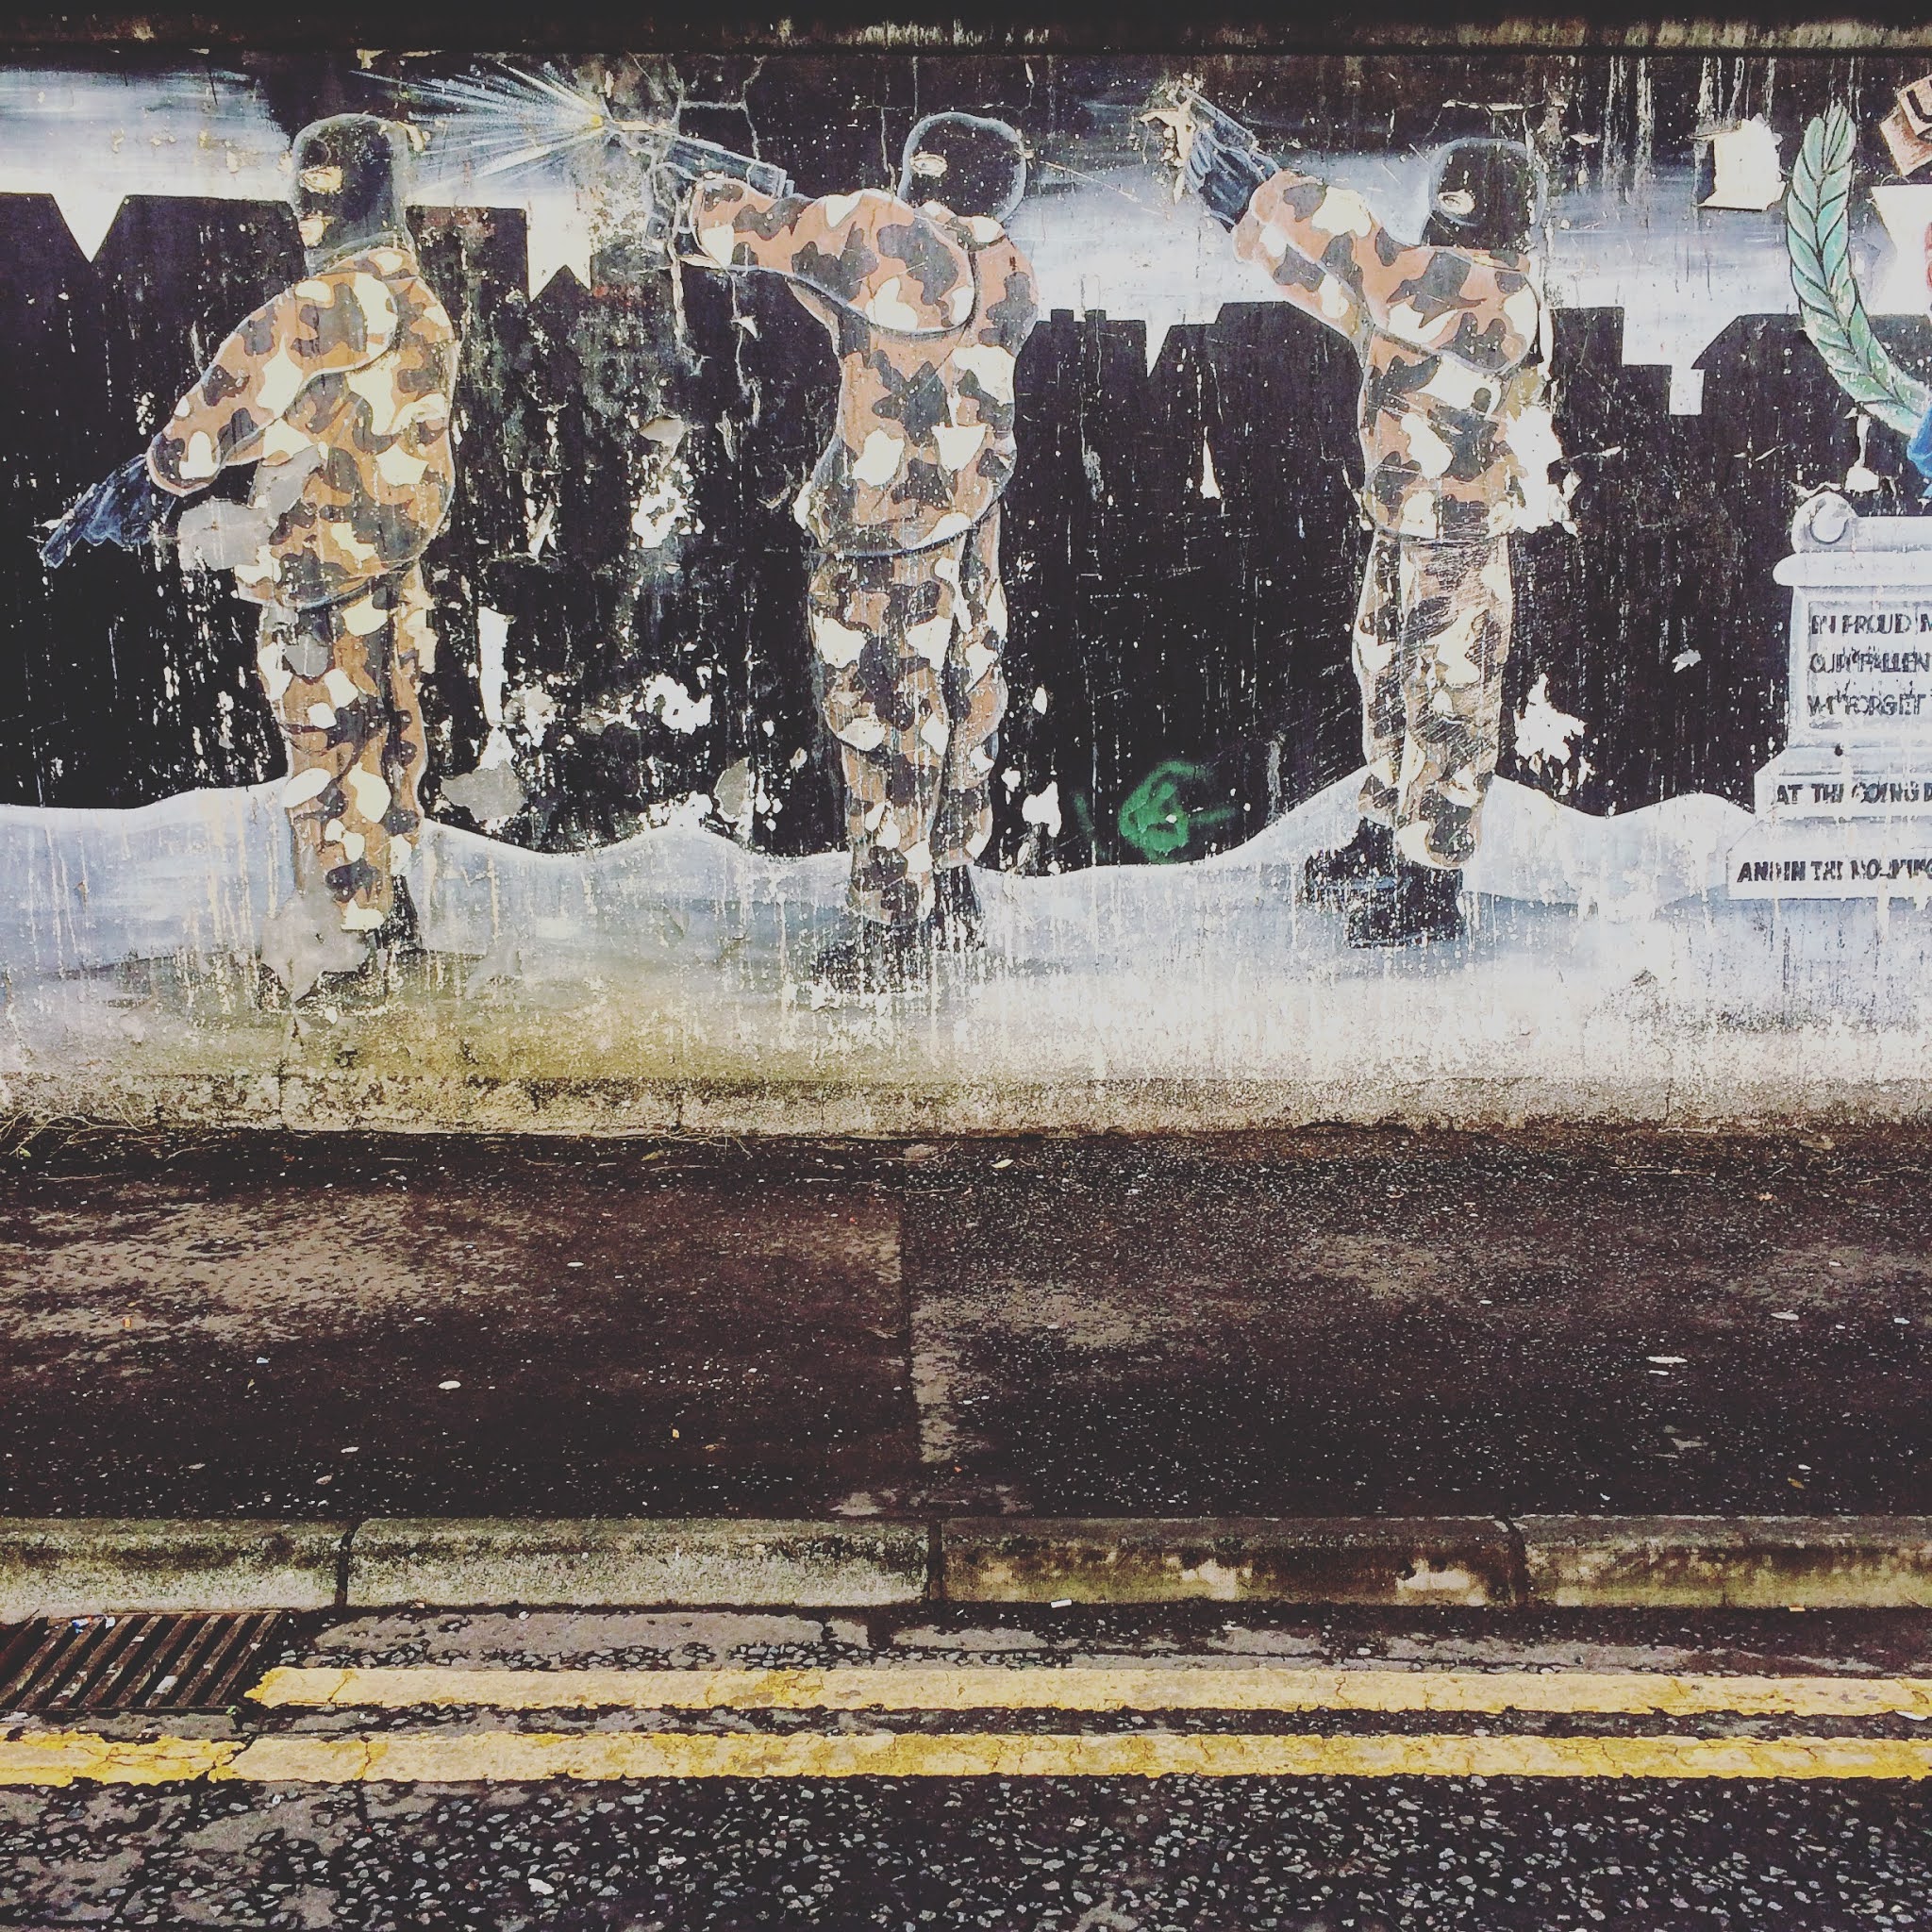 mural of men wearing camouflage firing guns in belfast city